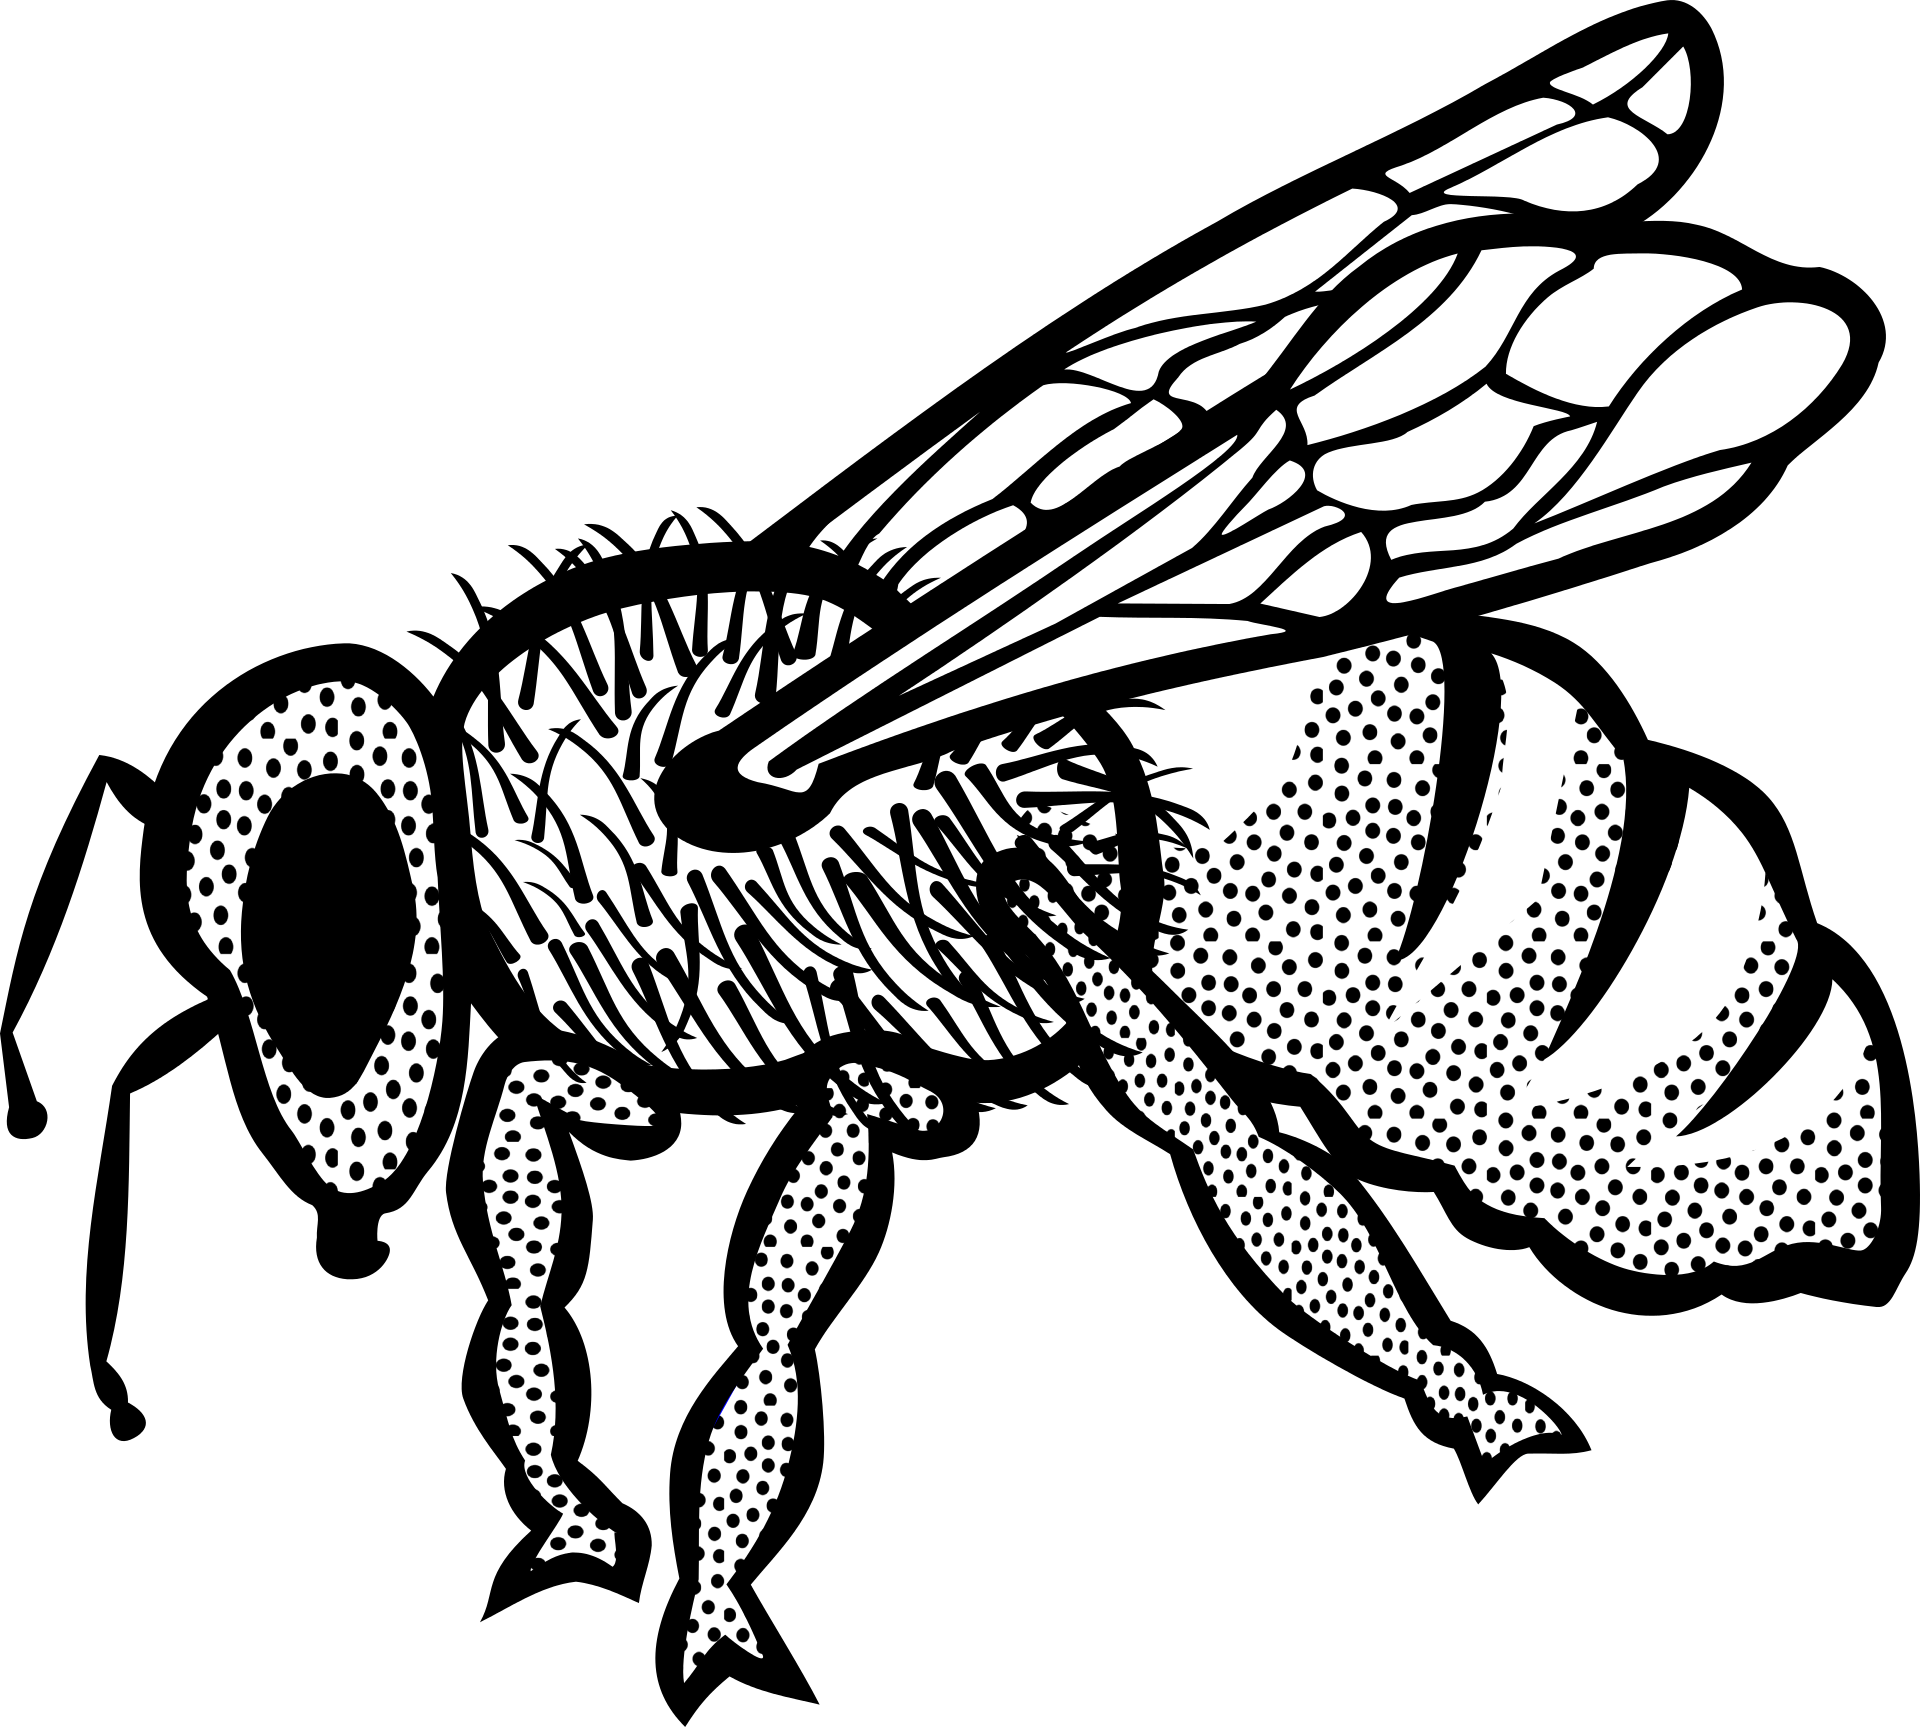 Animal Bee drawing free image download